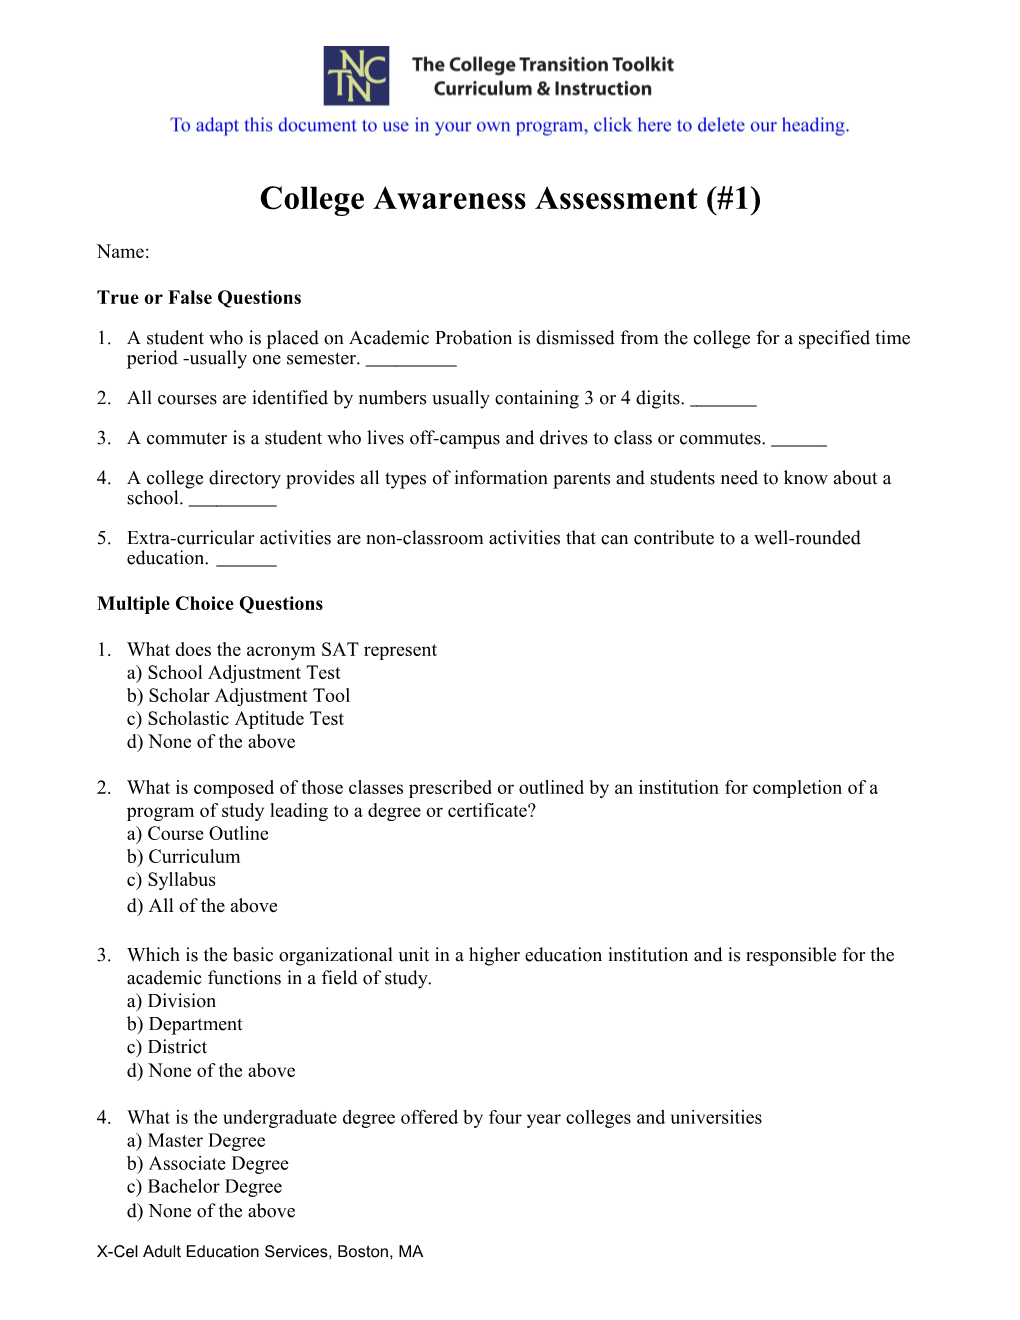 College Awareness Assessment (#1)